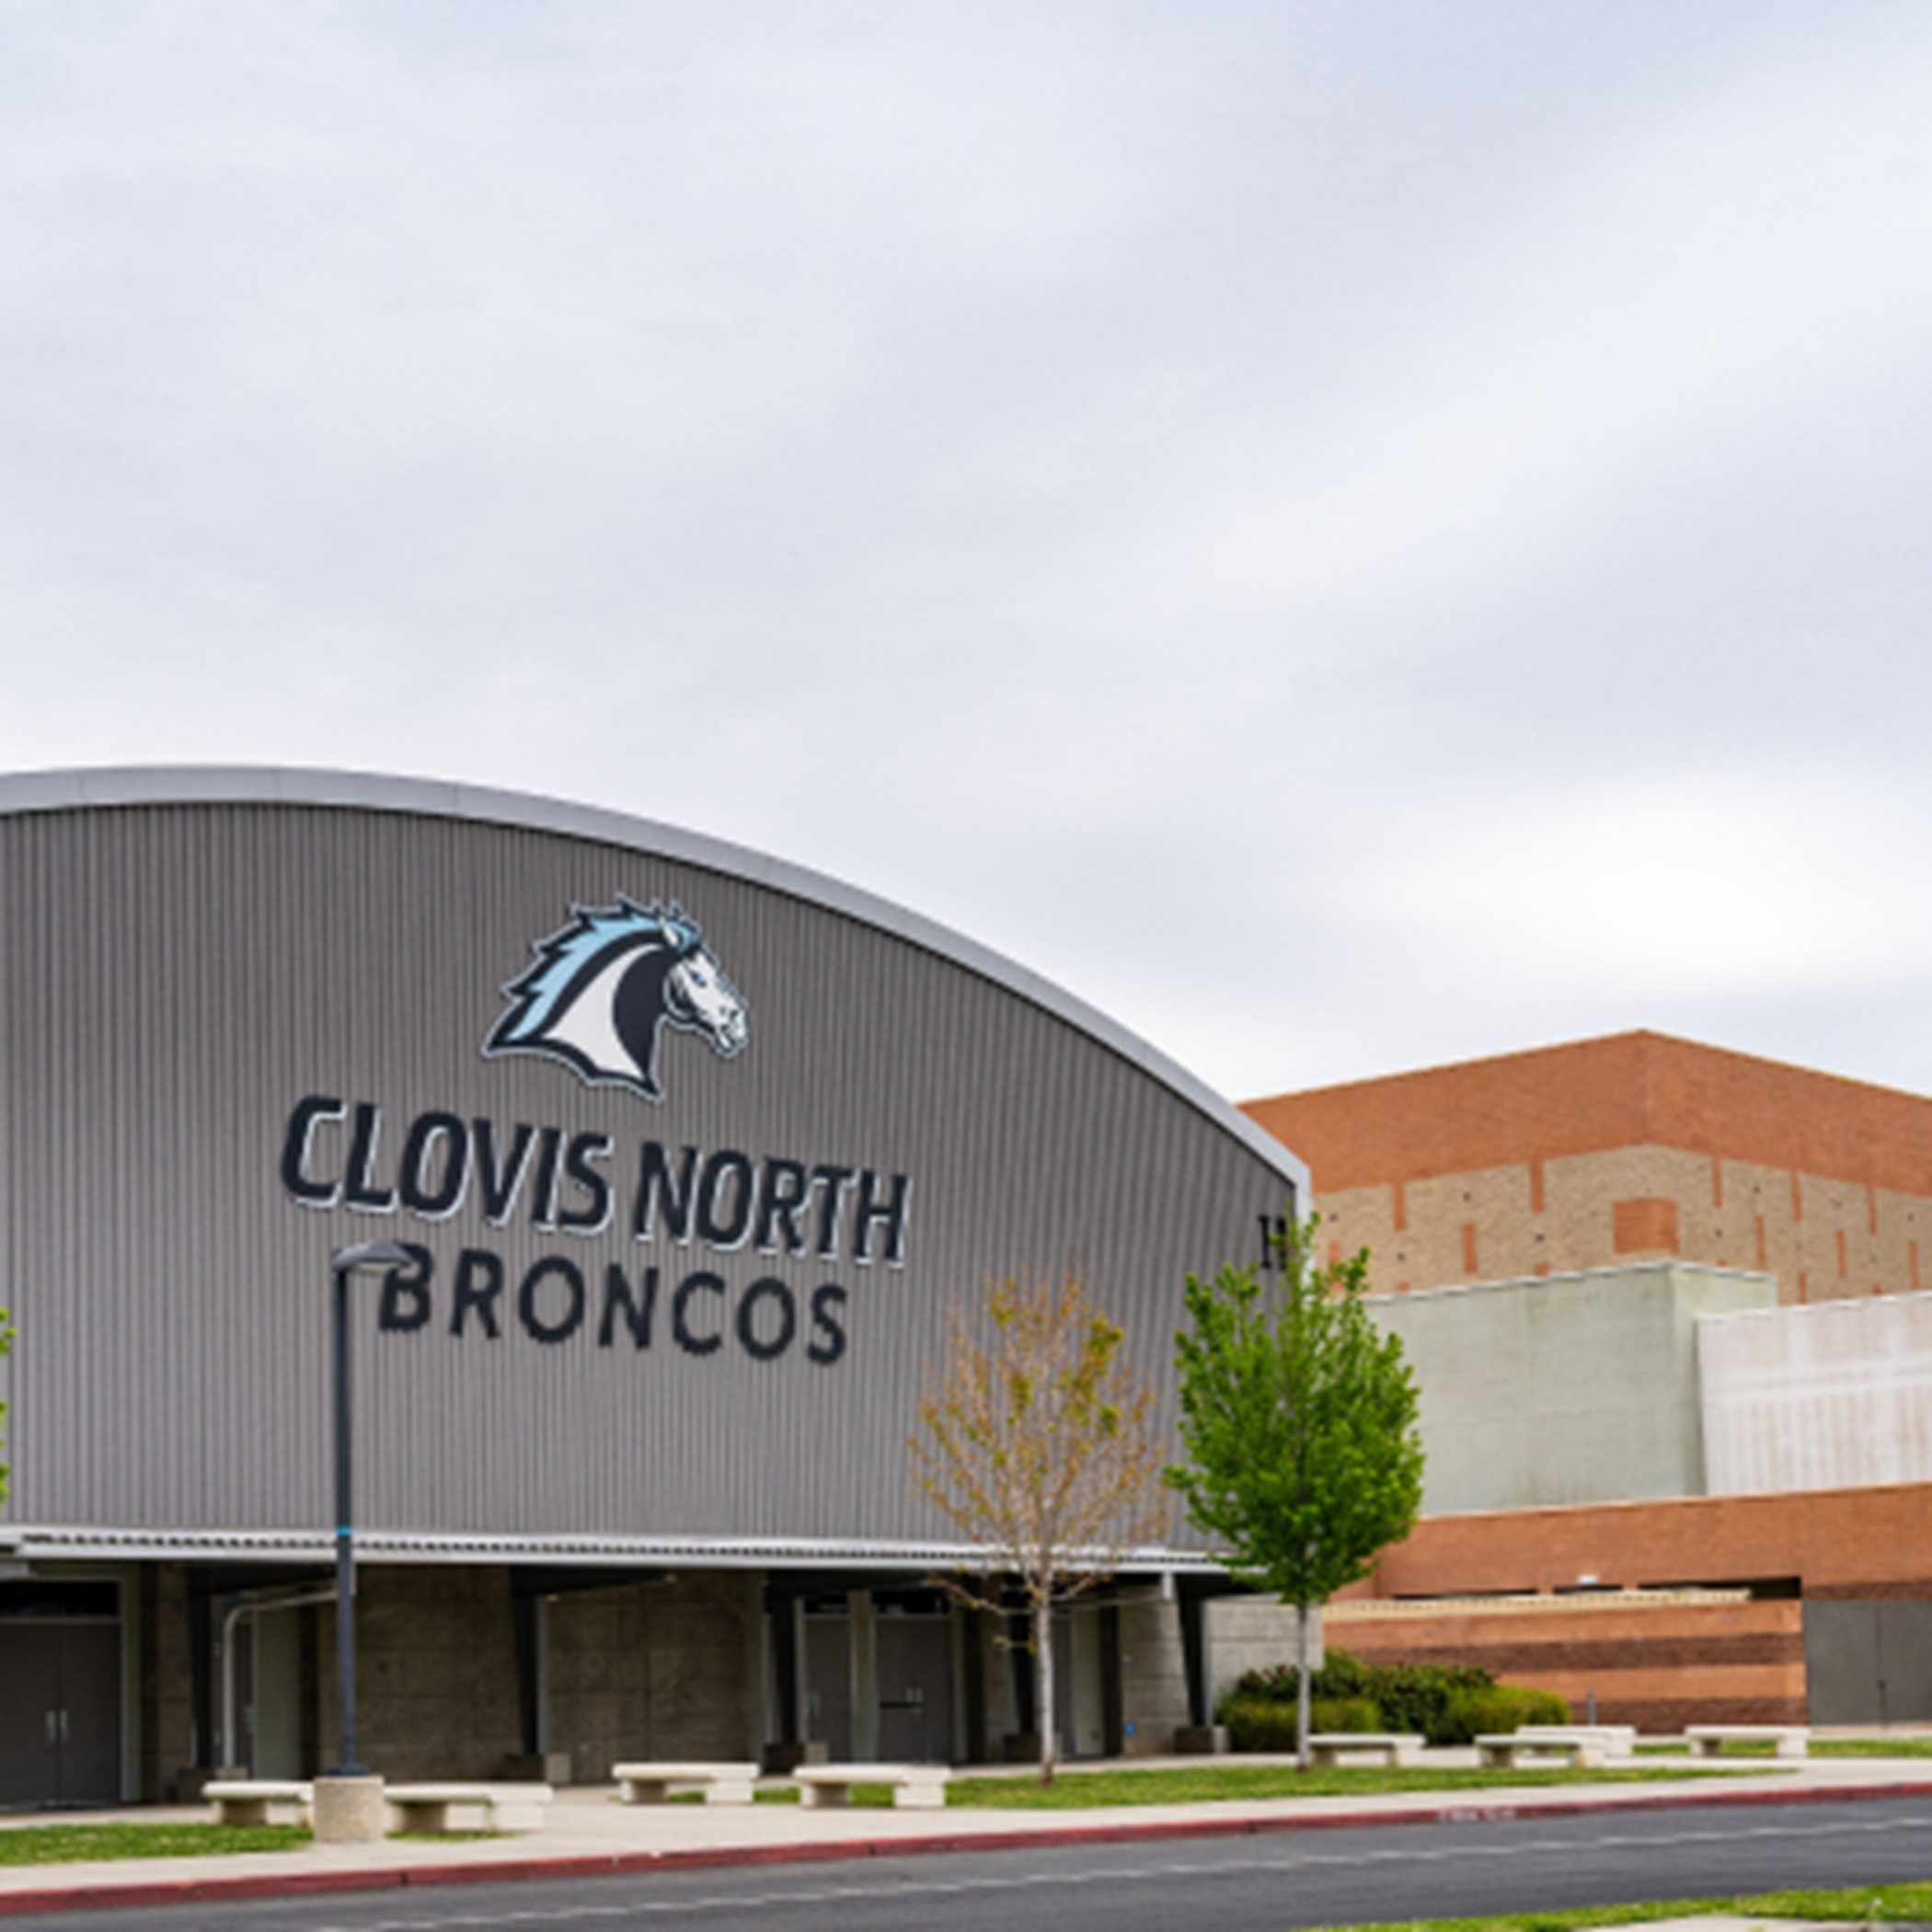 Exterior of the Clovis North High School